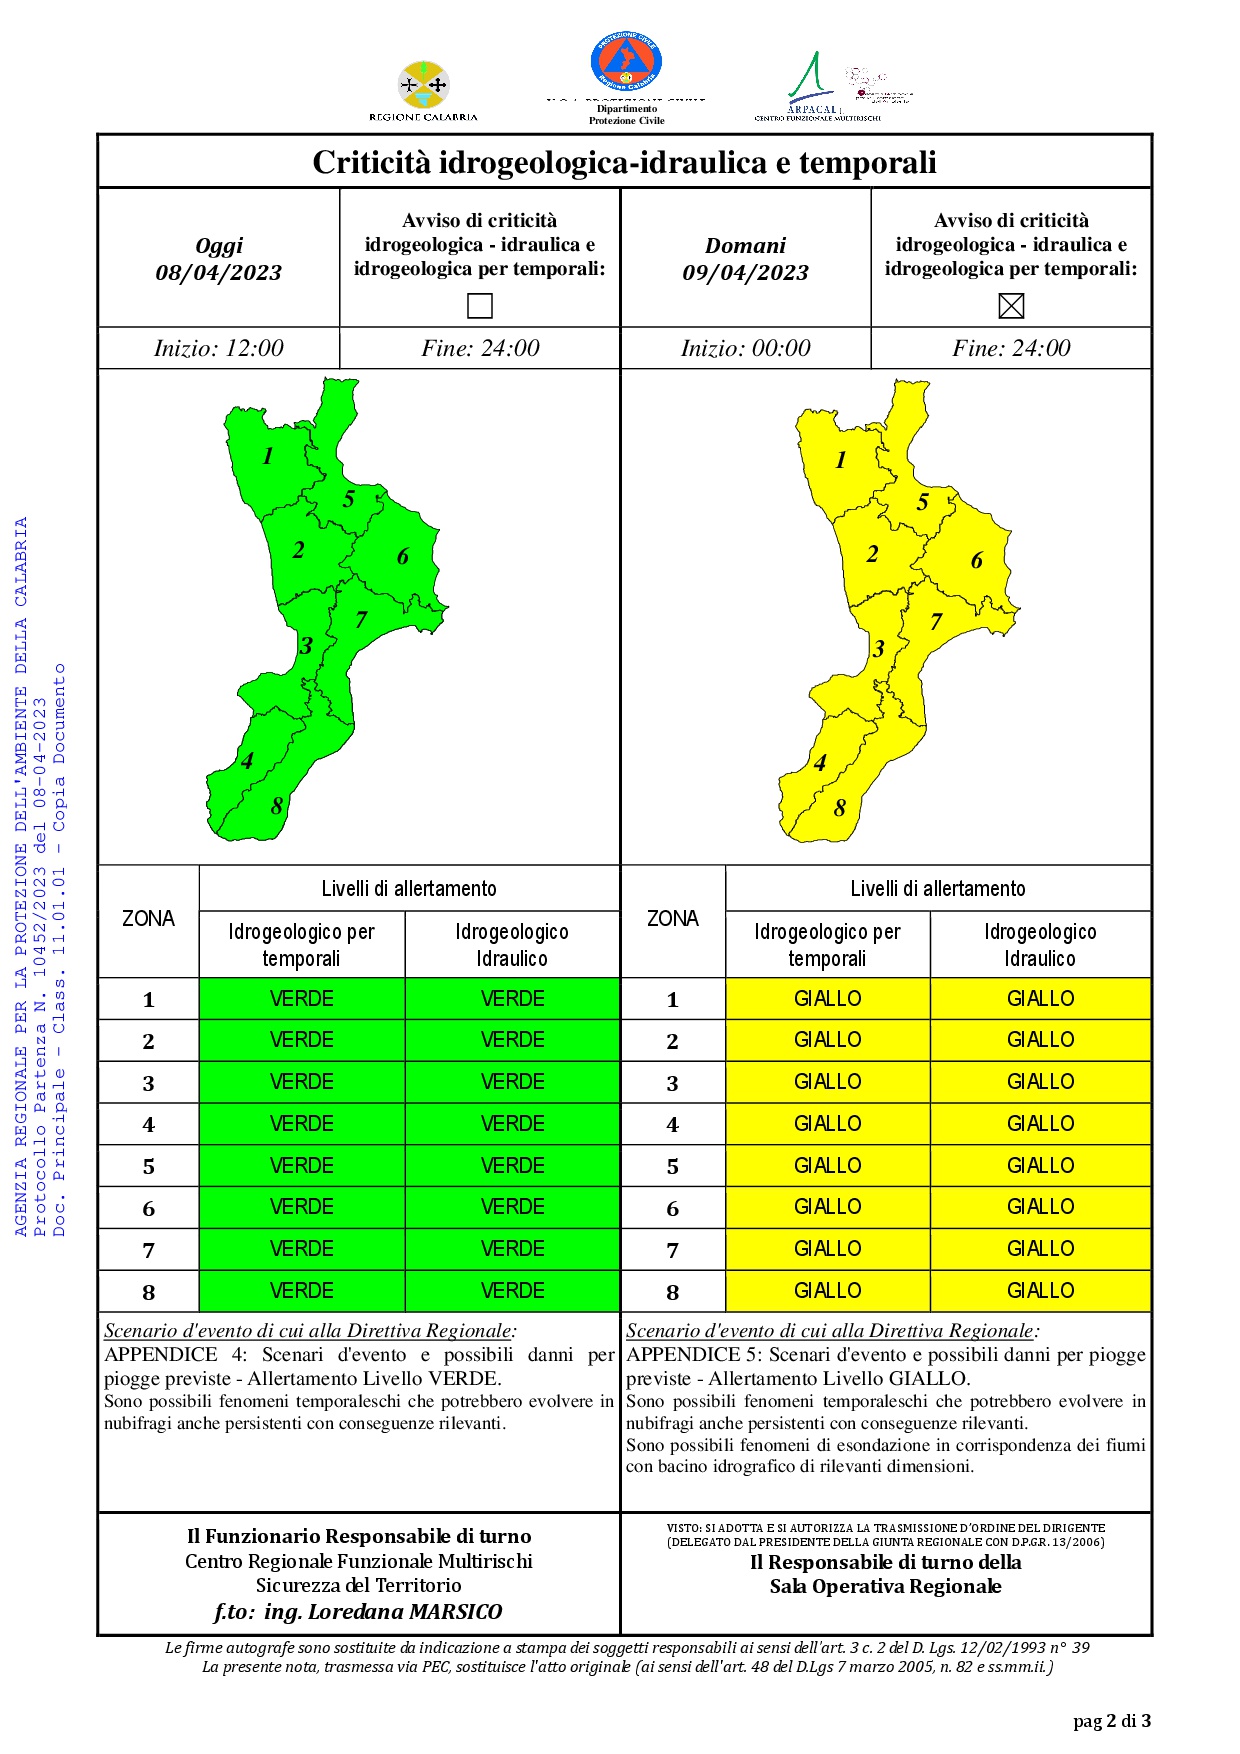 Criticità idrogeologica-idraulica e temporali in Calabria 08-04-2023